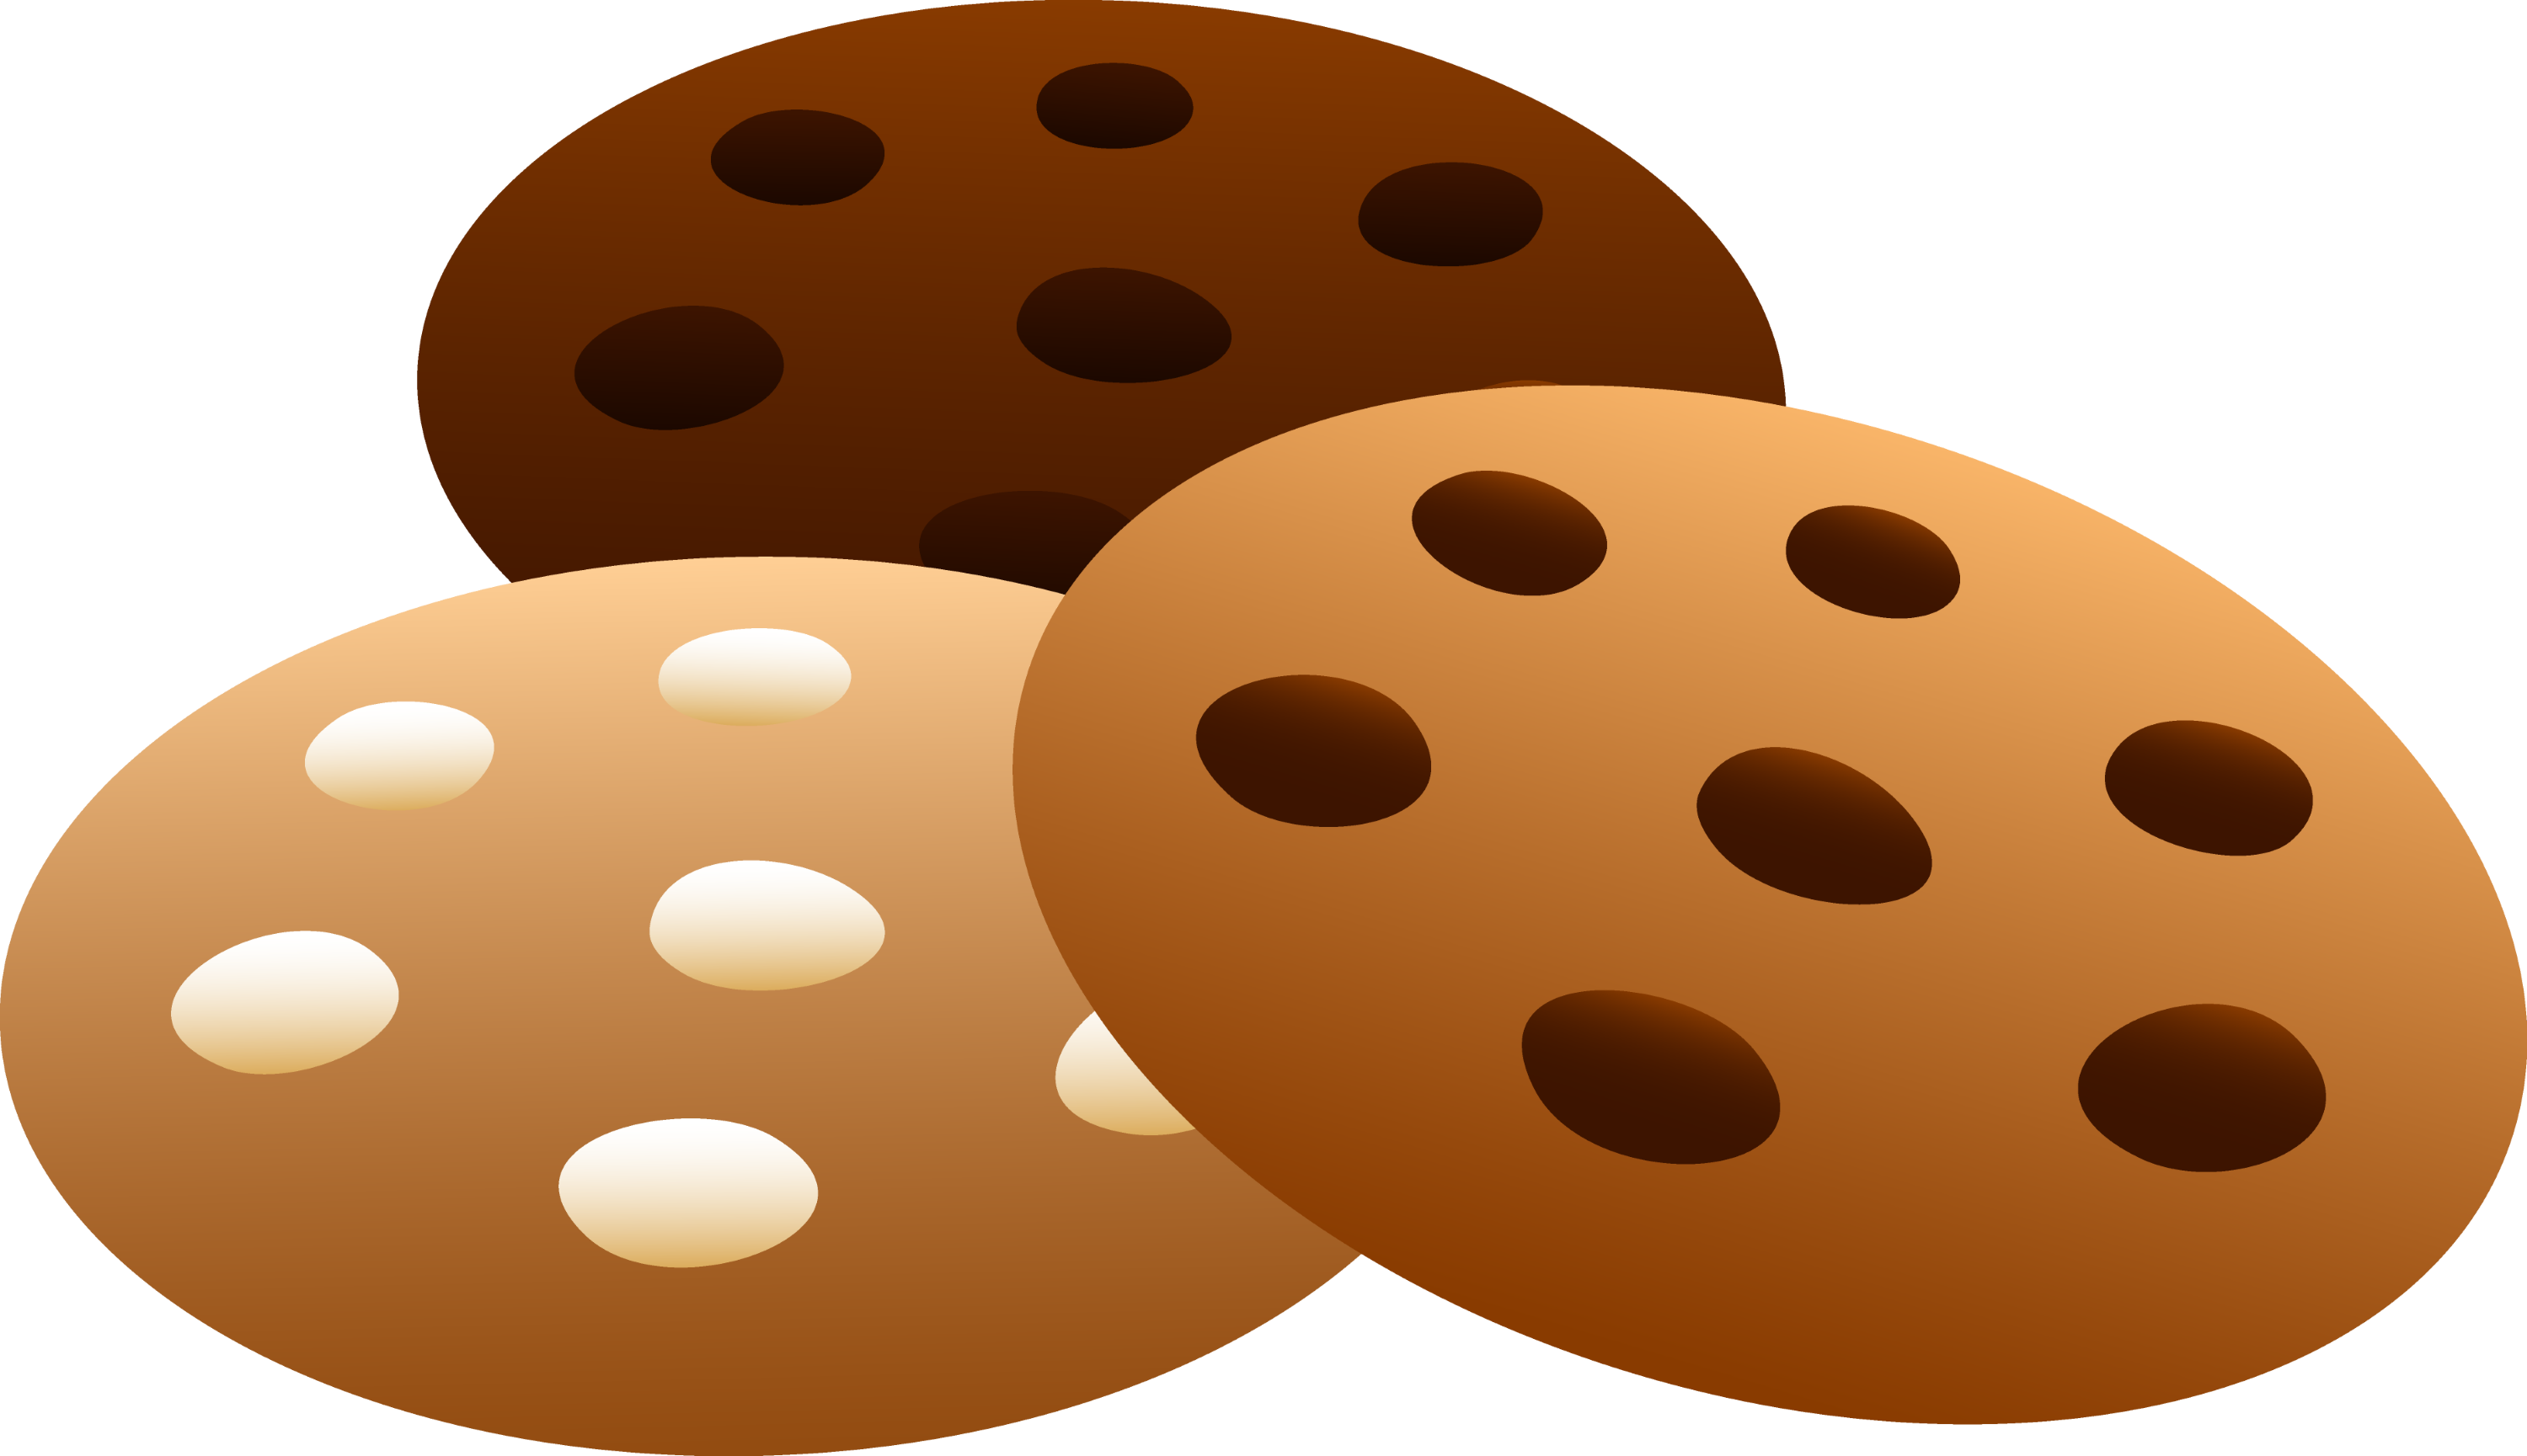 three-flavors-of-cookies-free-clip-art